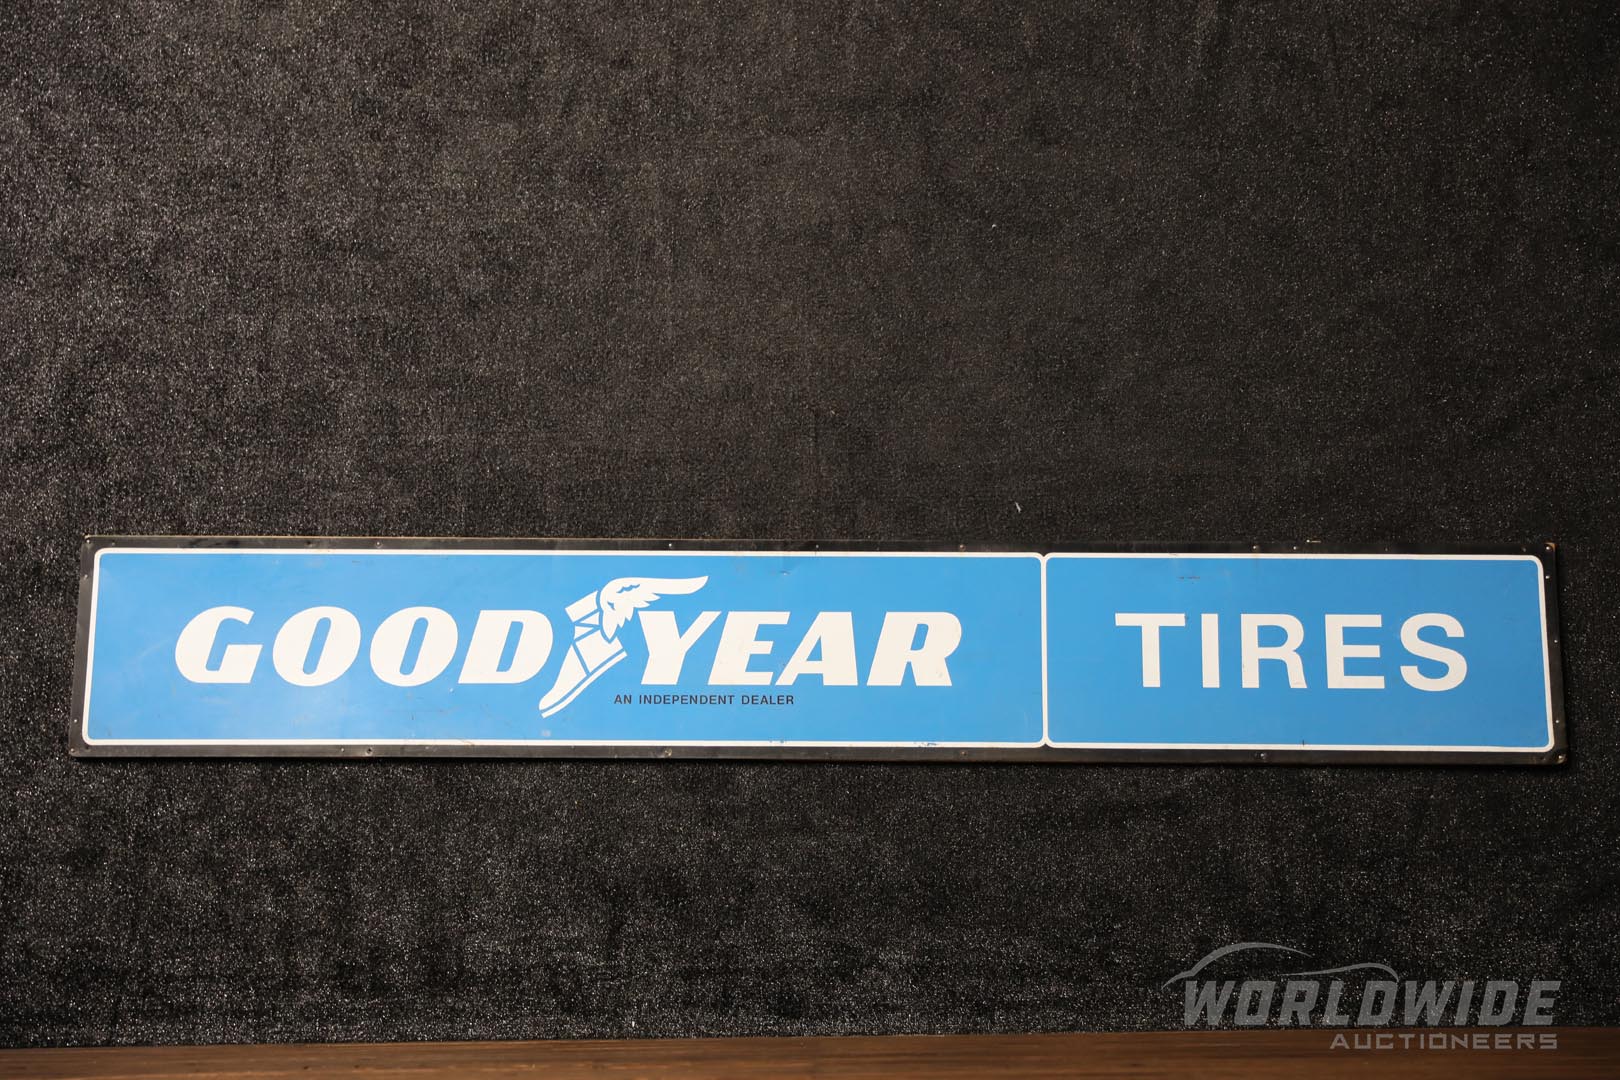  Goodyear Tires Dealership Larg e Tin Sign 